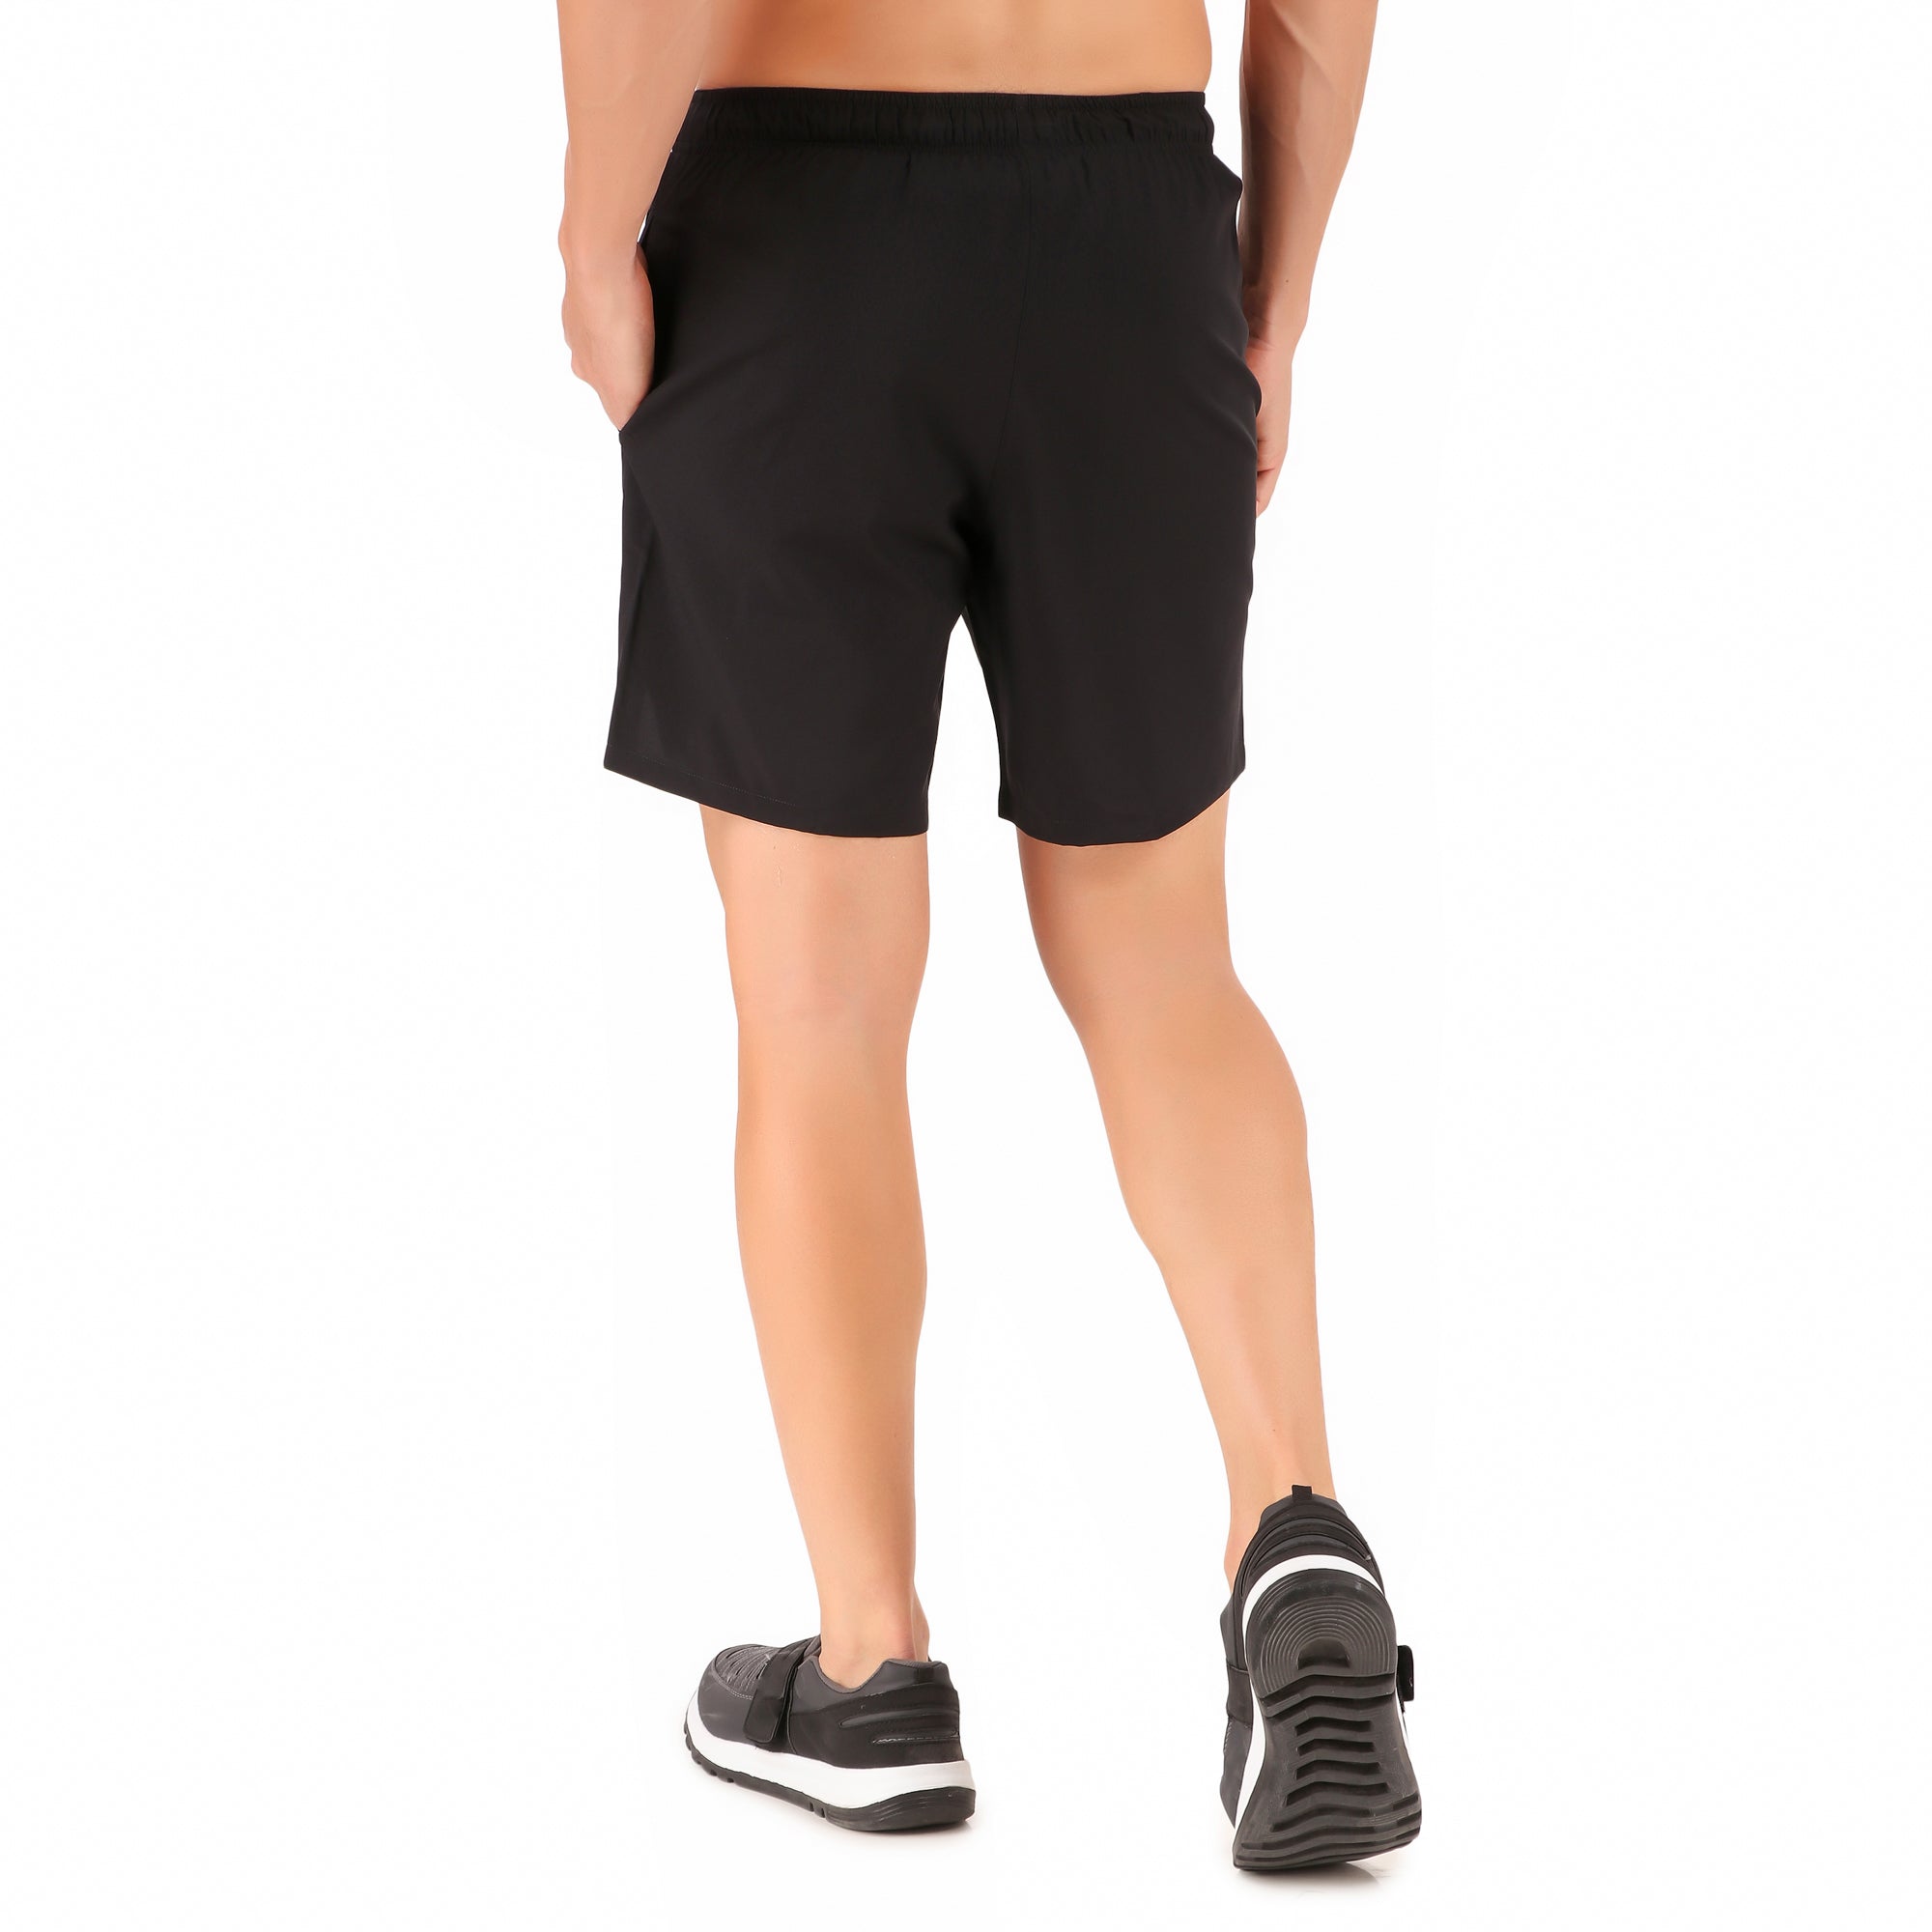 Ultra Lightweight Sports Shorts For Men (Black)